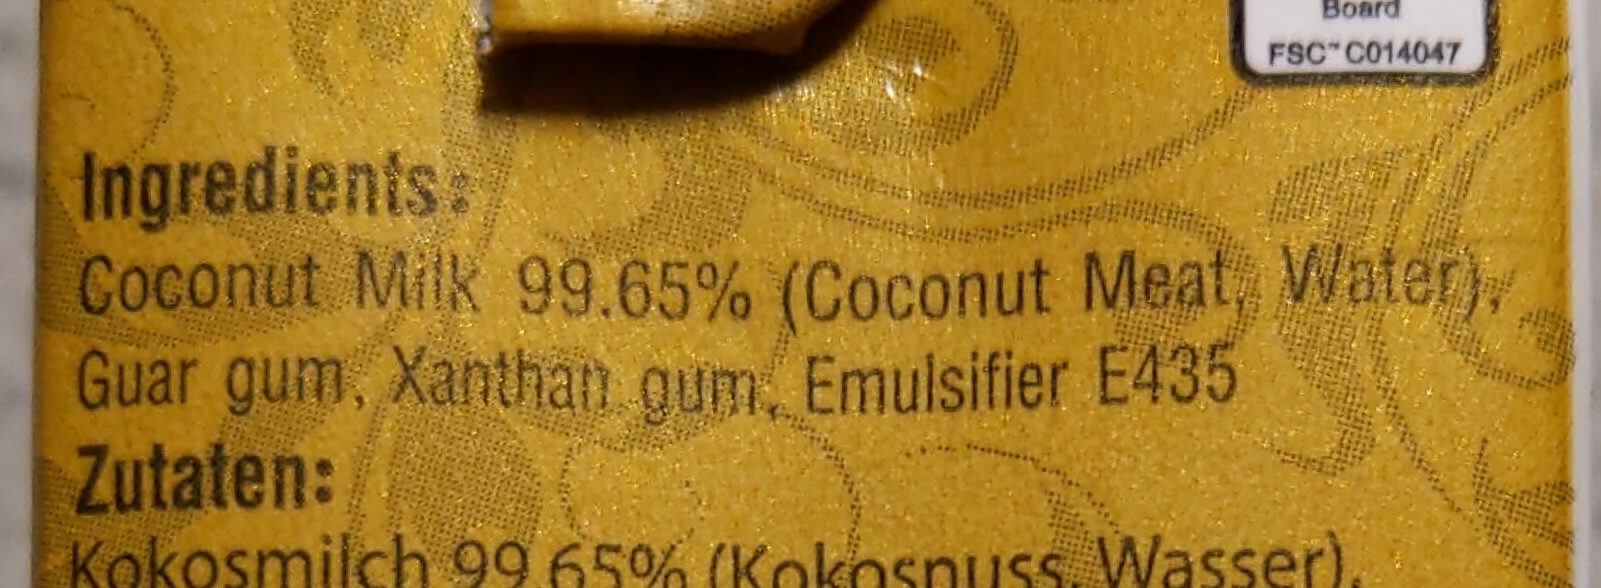 Coconut milk - Ingredienser - en